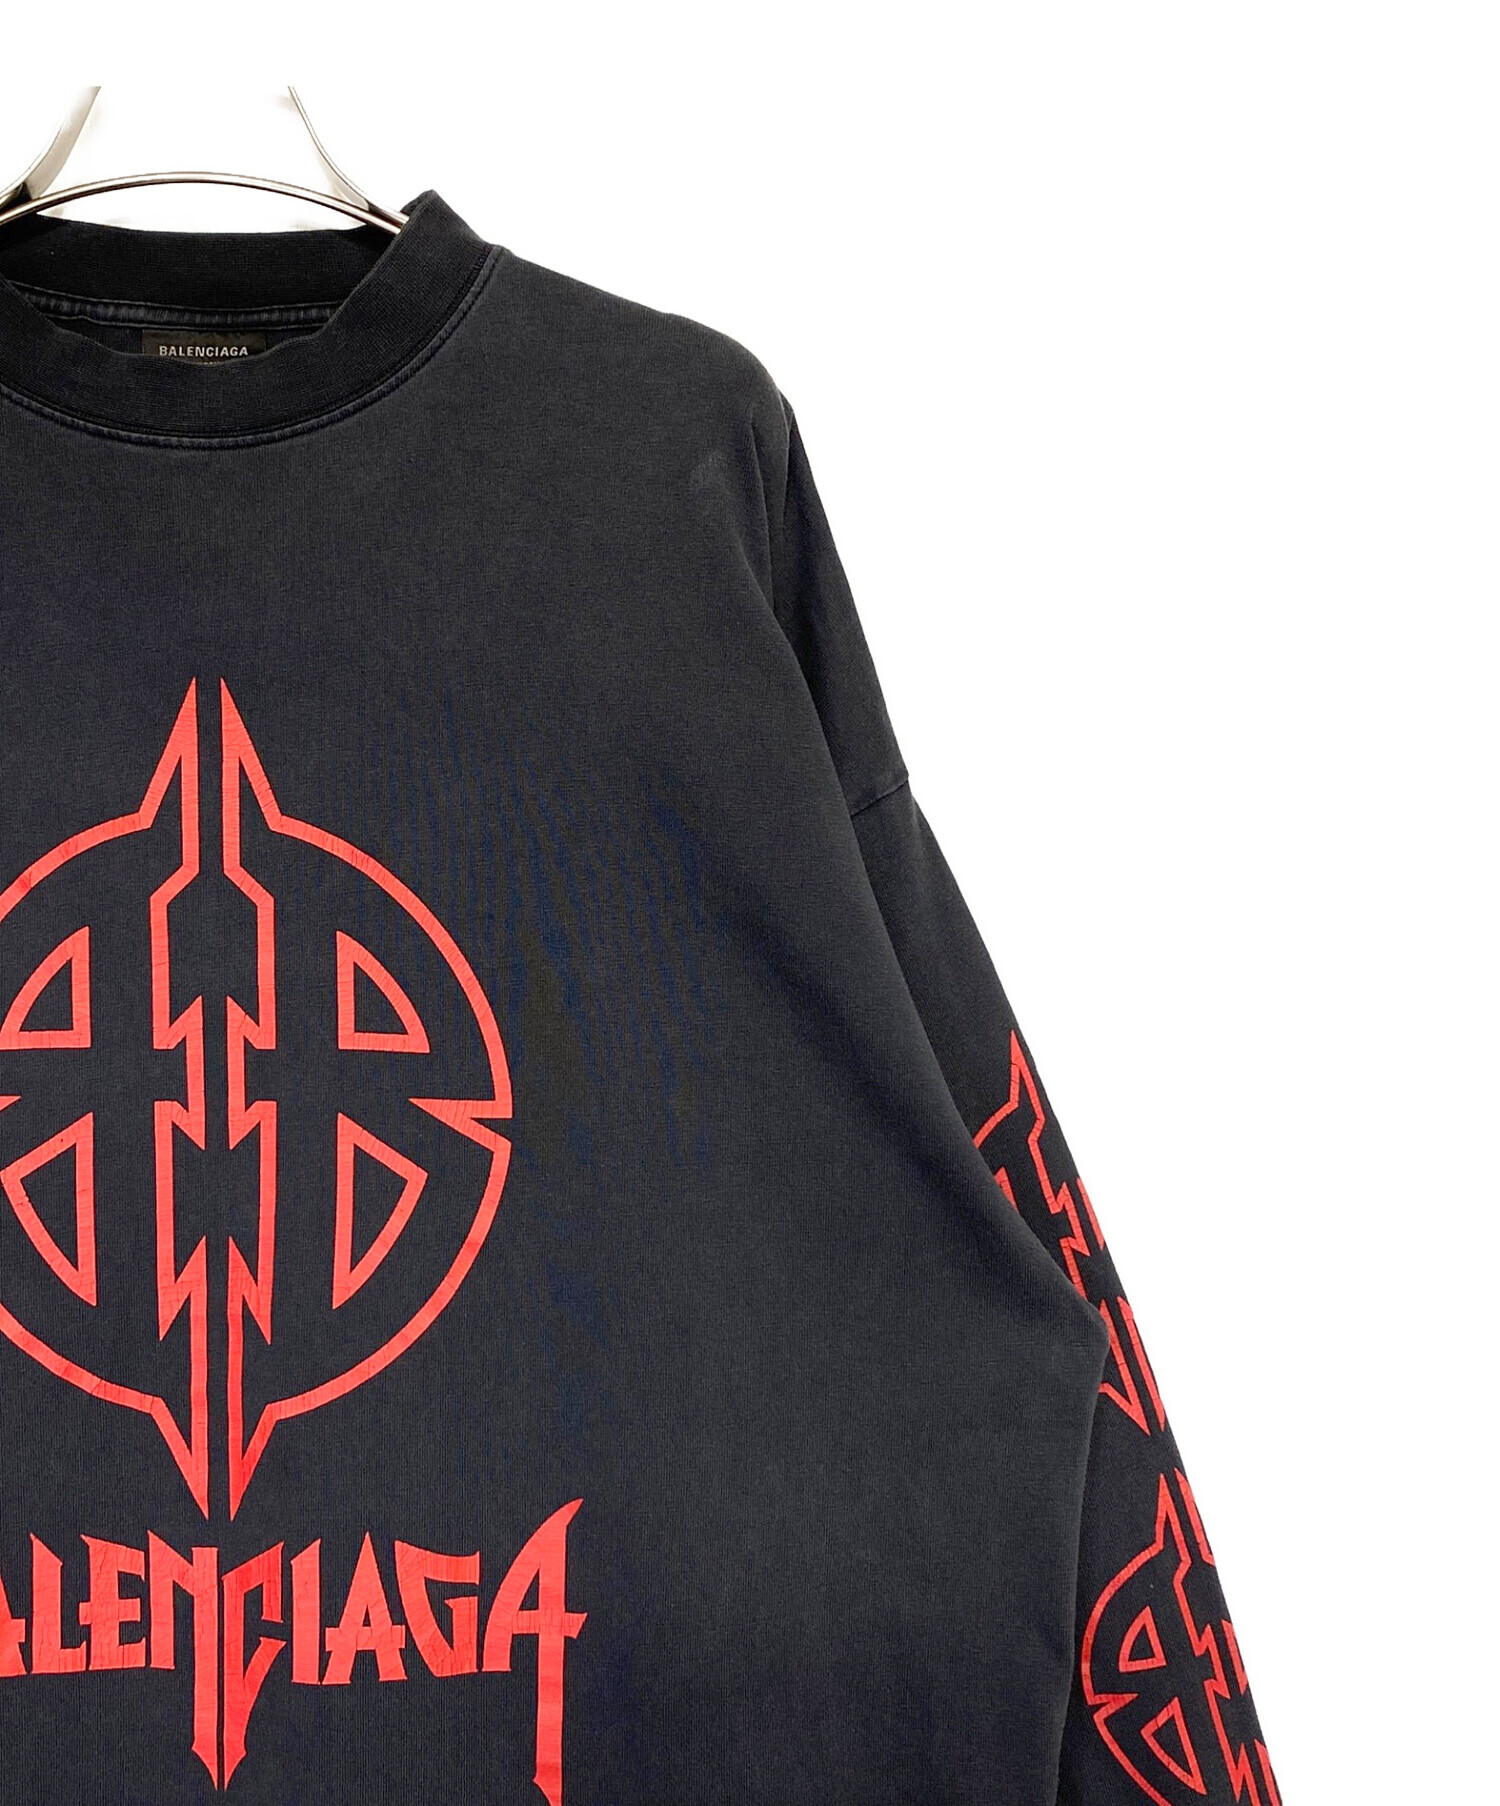 BALENCIAGA (バレンシアガ) Long Sleeve Metal T-Shirt グレー サイズ:L